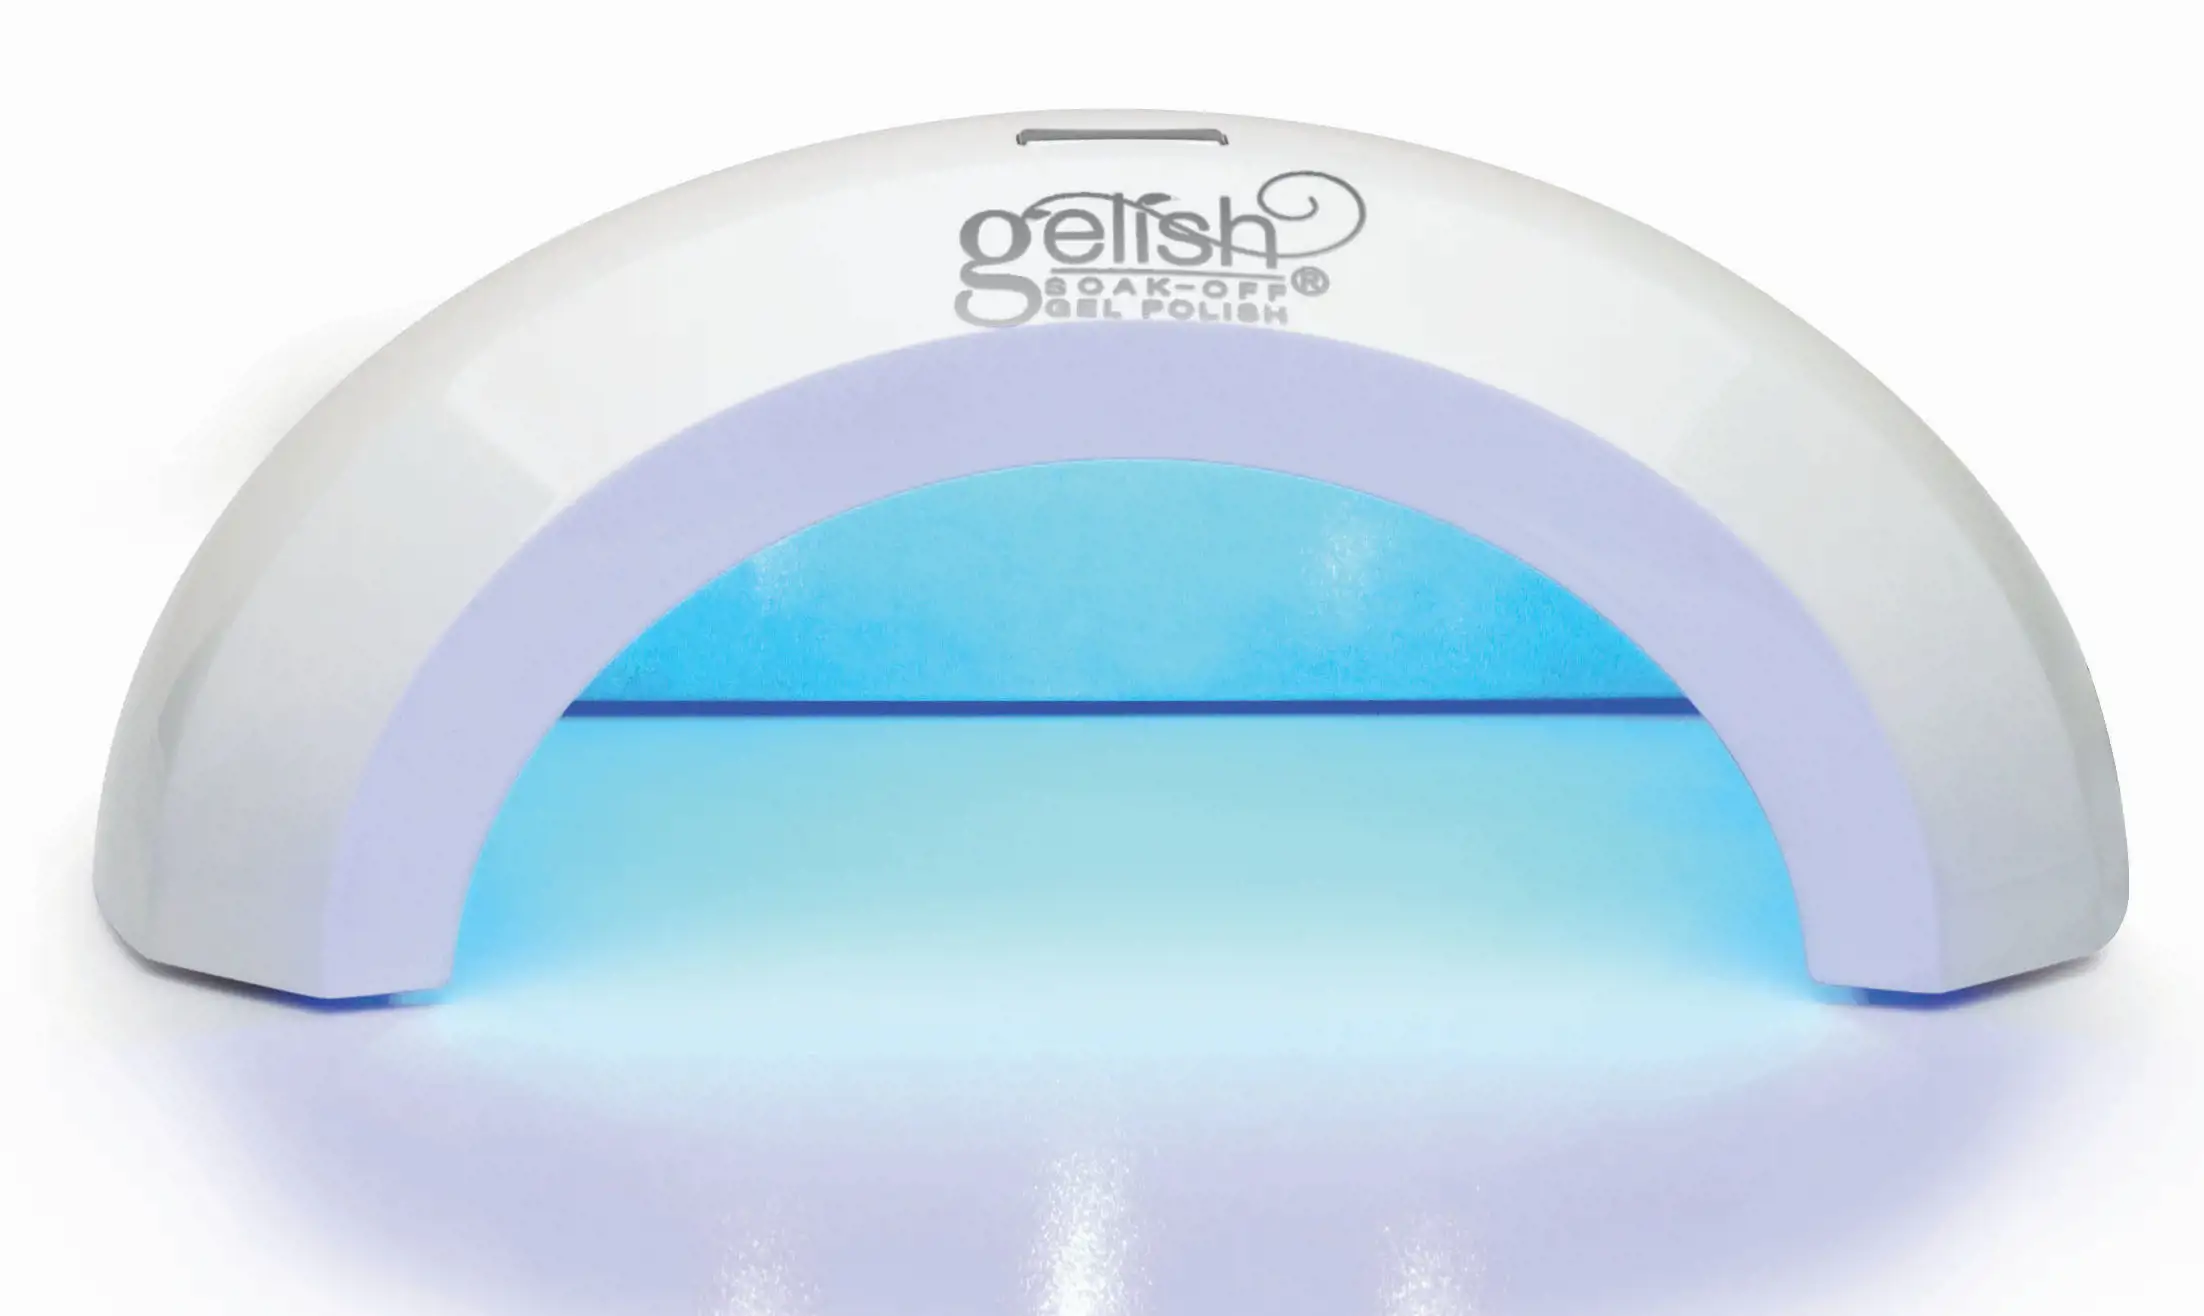 Gelish Mini Pro 45 Second LED Curing Gel Soak Nail Polish Sa